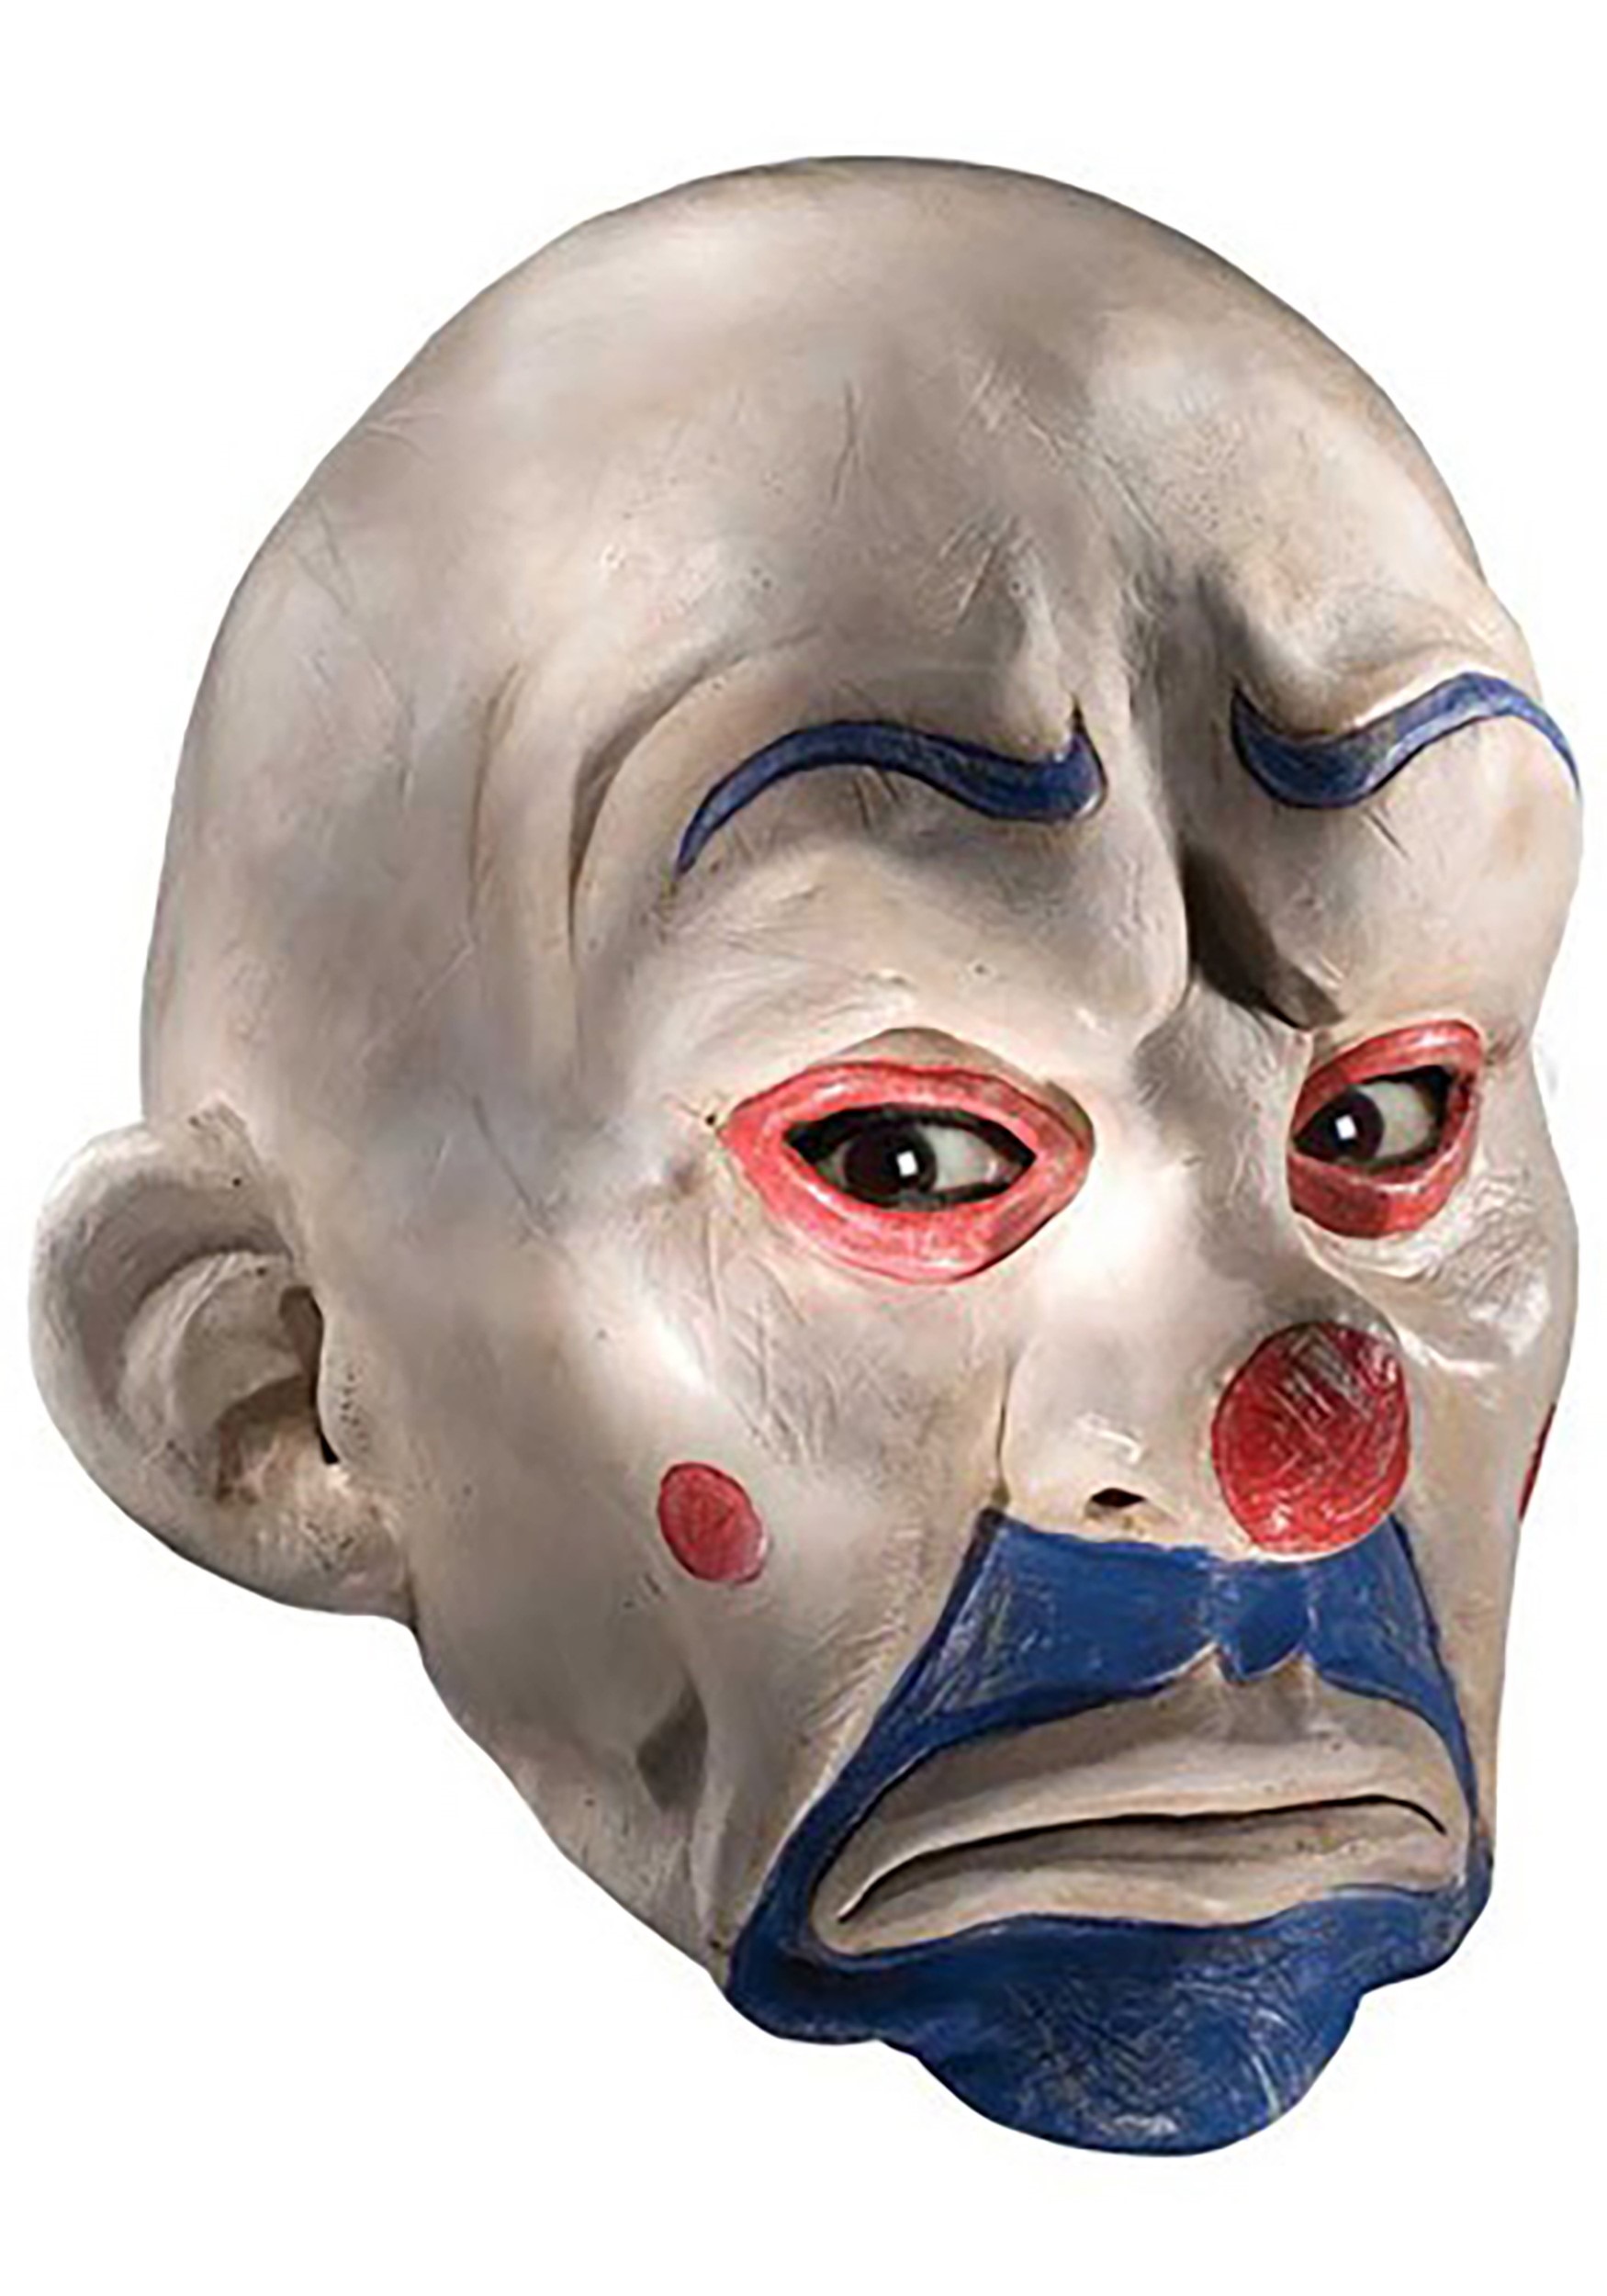 Værdiløs Distraktion Betaling Joker Clown Mask